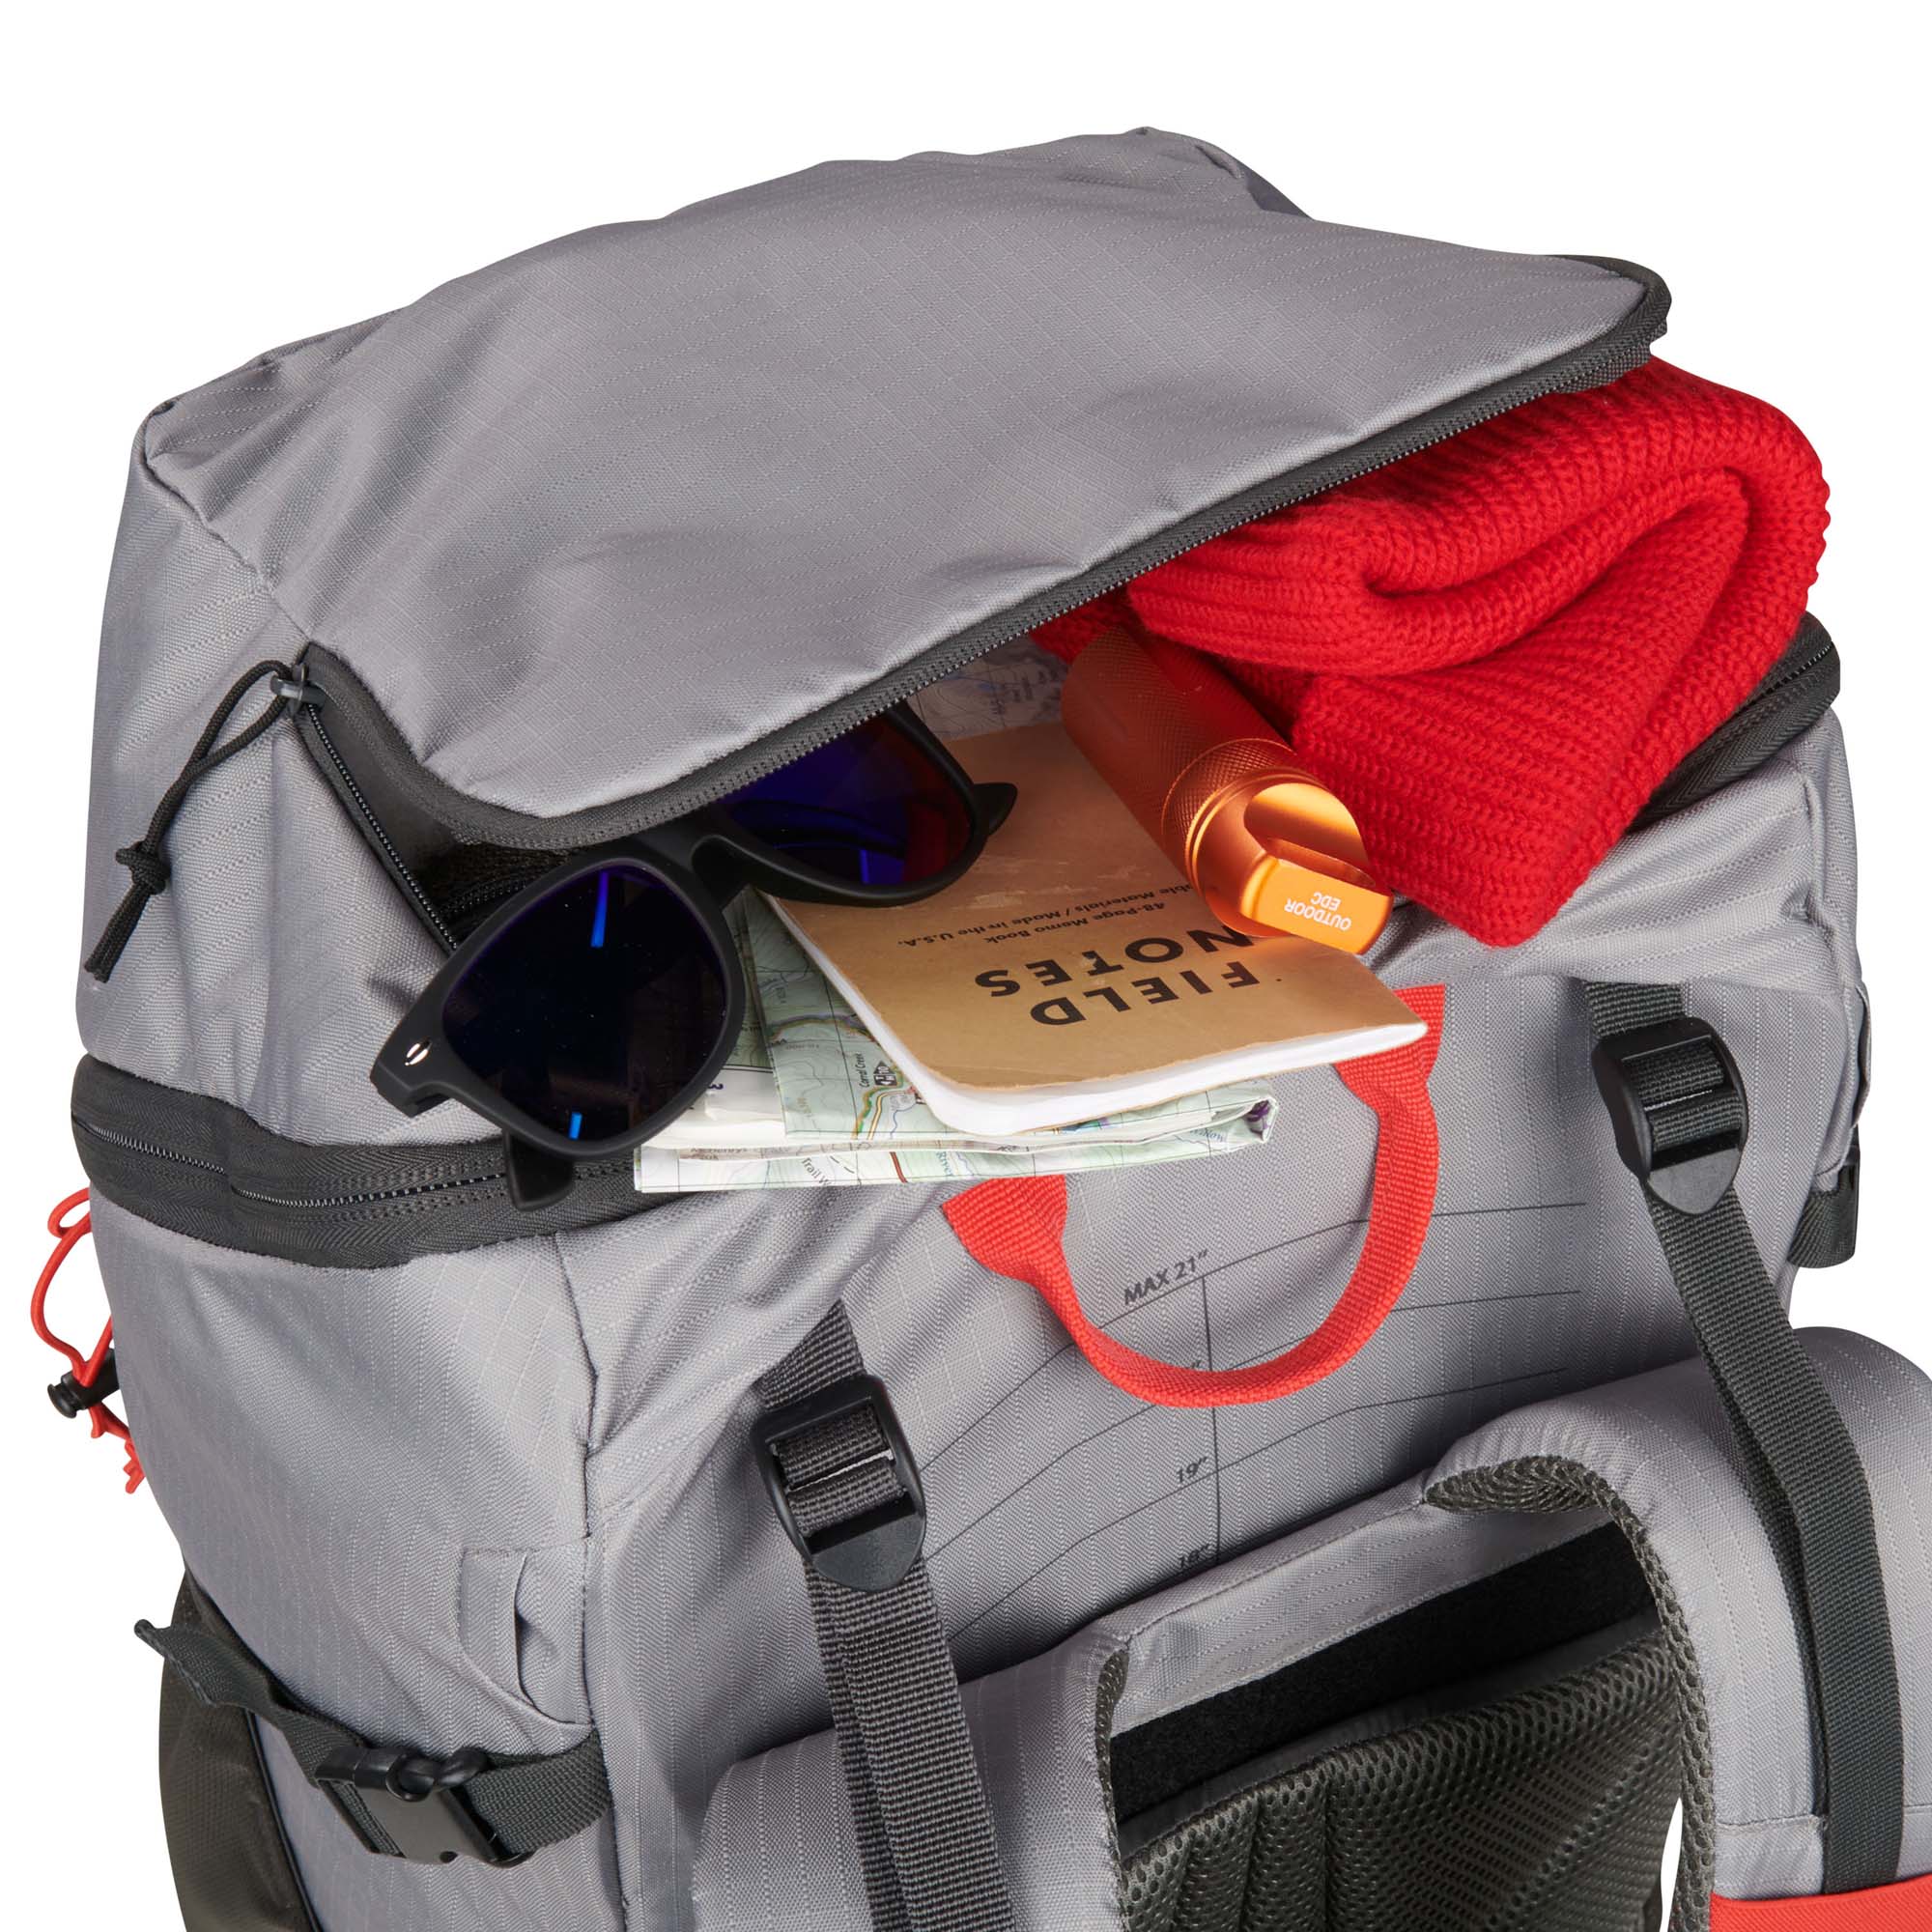 Sierra Designs Gigawatt 60 Trekking Thru Hiking Backpack